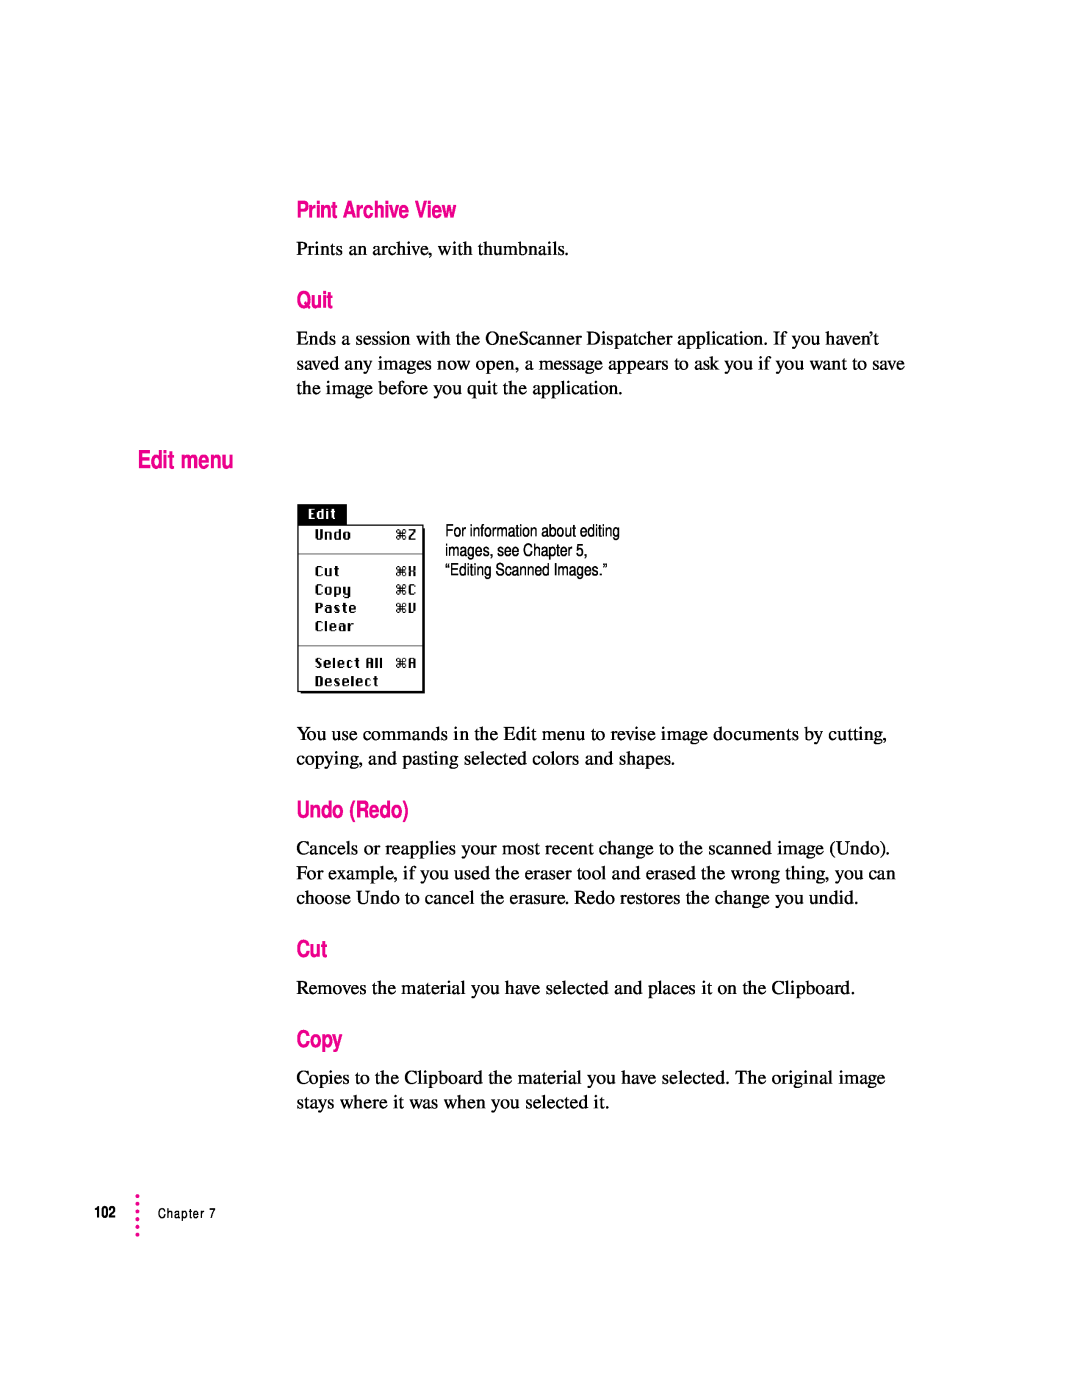 Apple 627, 1230 user manual Edit menu, Print Archive View, Quit, Undo Redo, Copy 